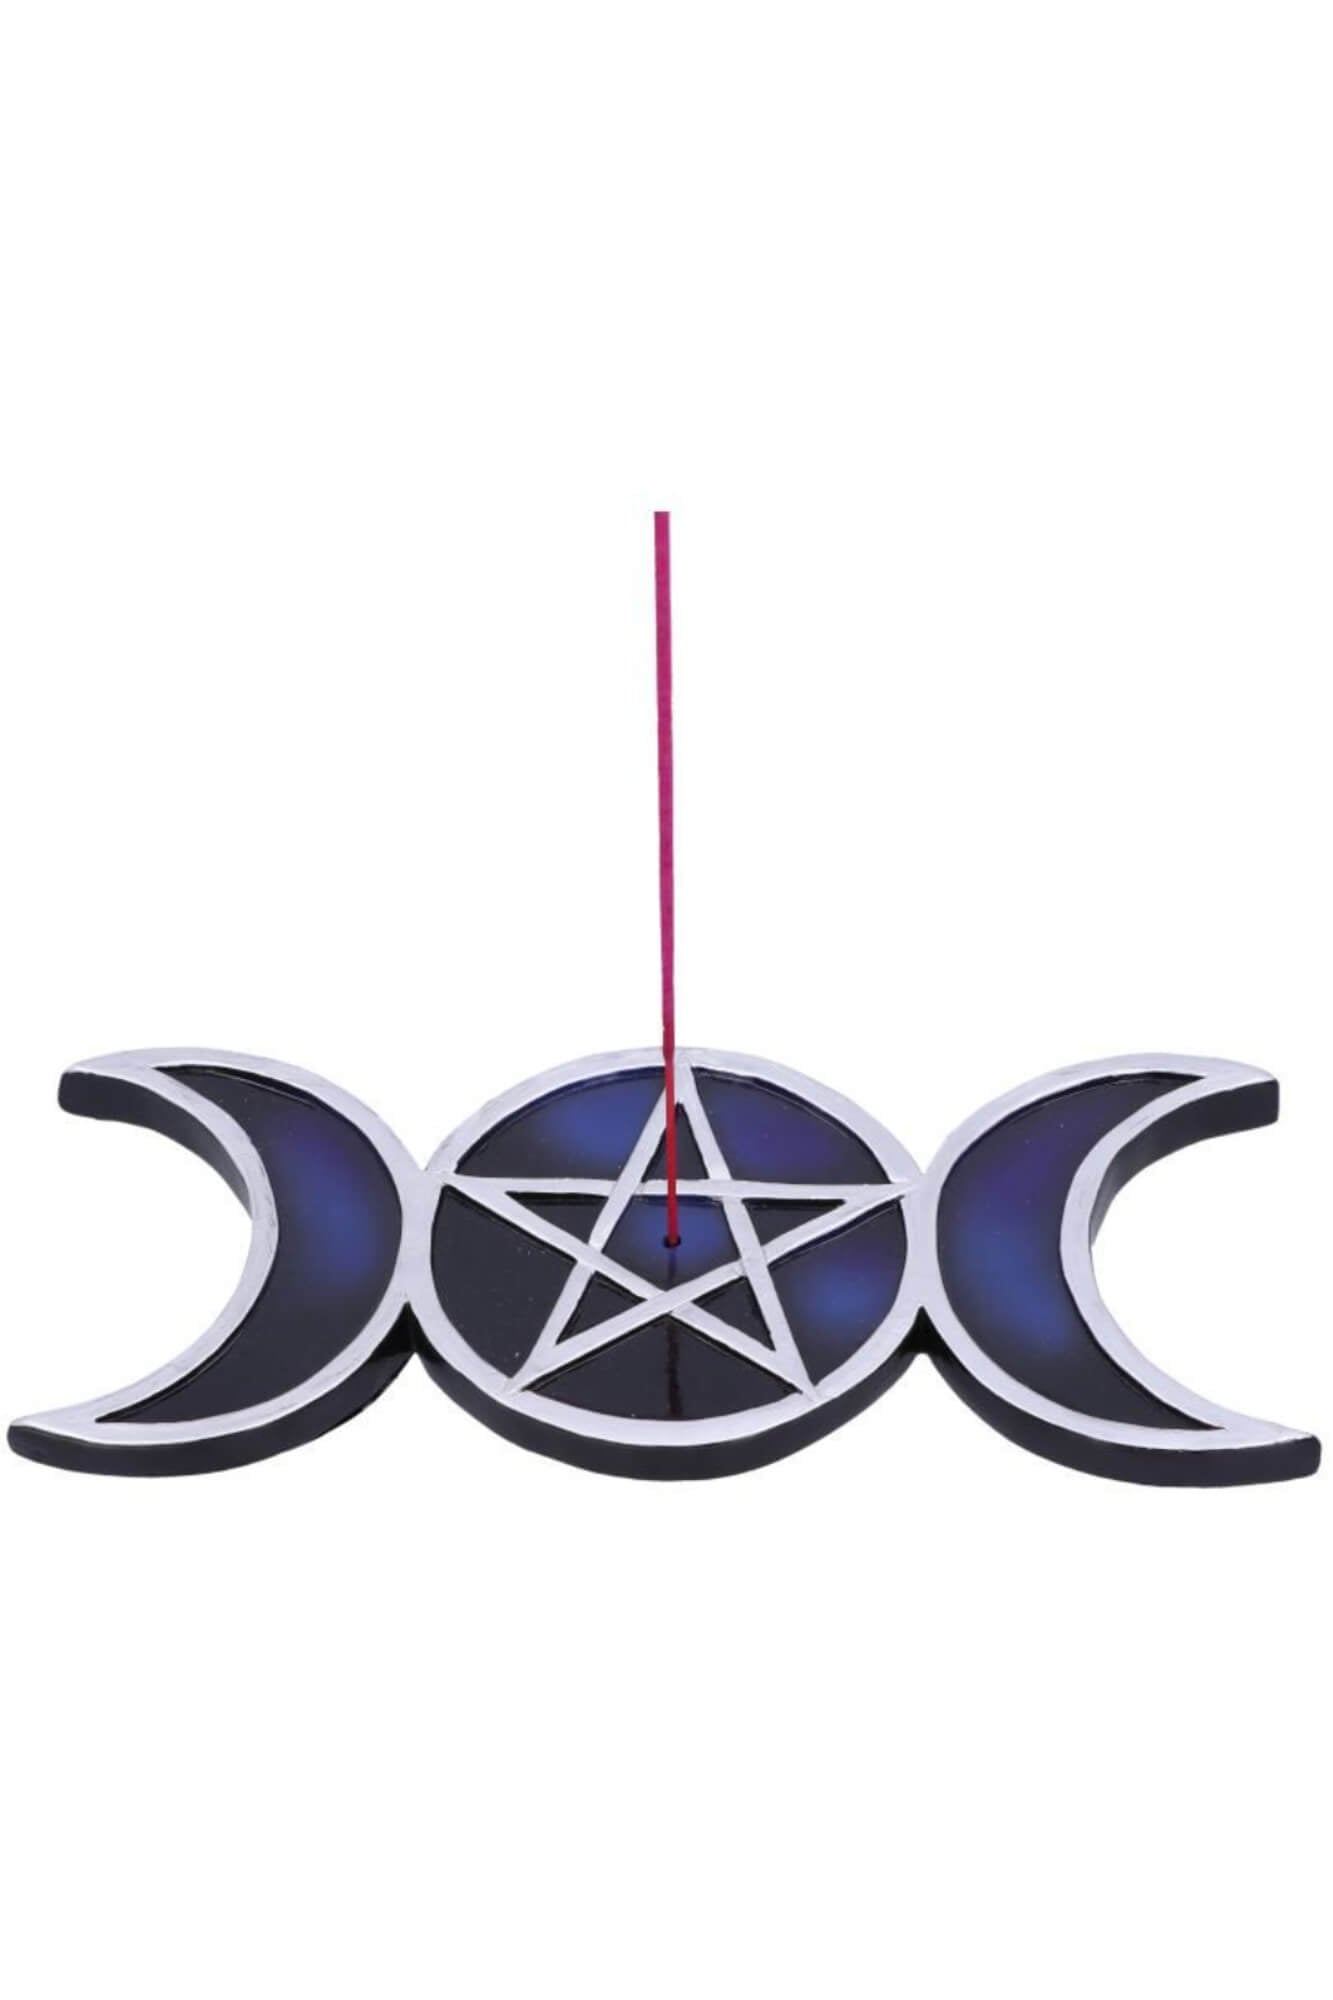 Nemesis Now Triple Moon symbol Lunar Trinity Incense Burners